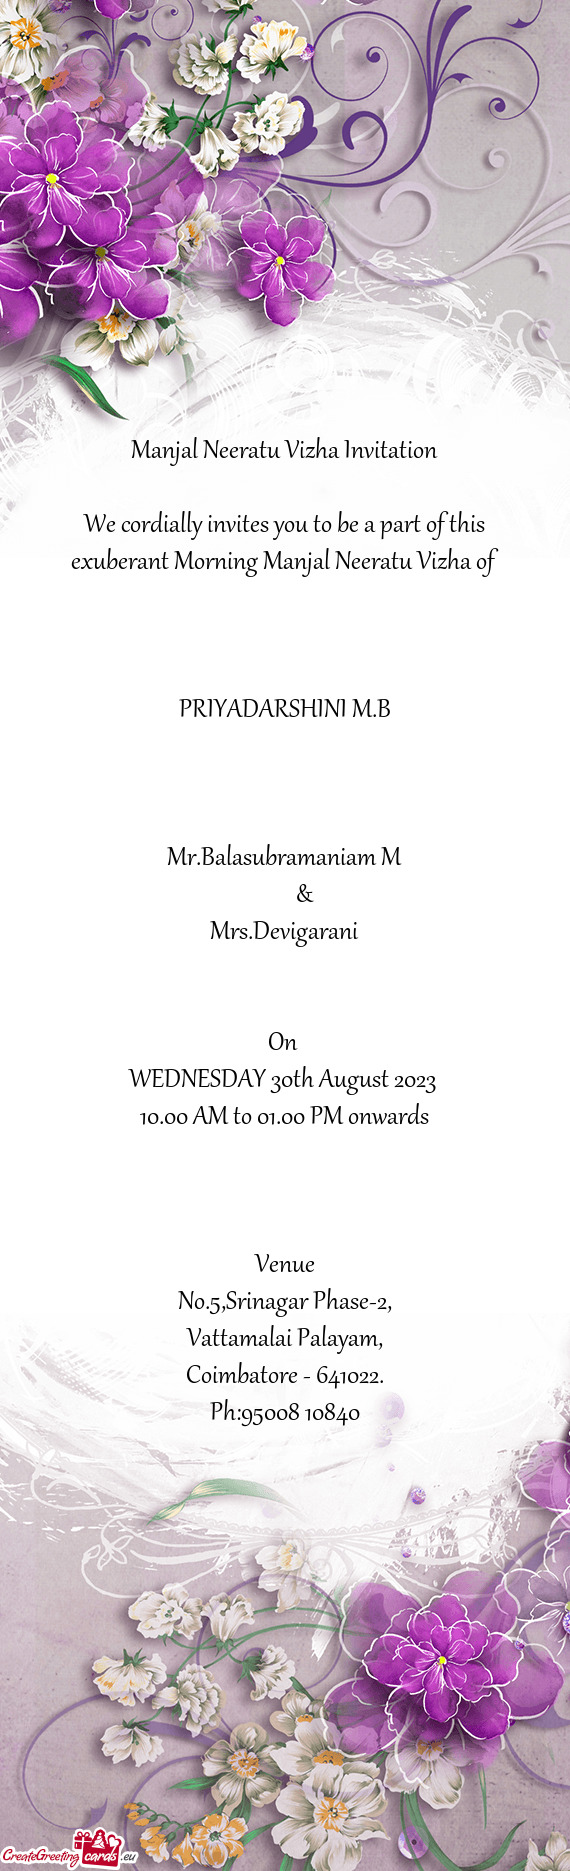 Mr.Balasubramaniam M